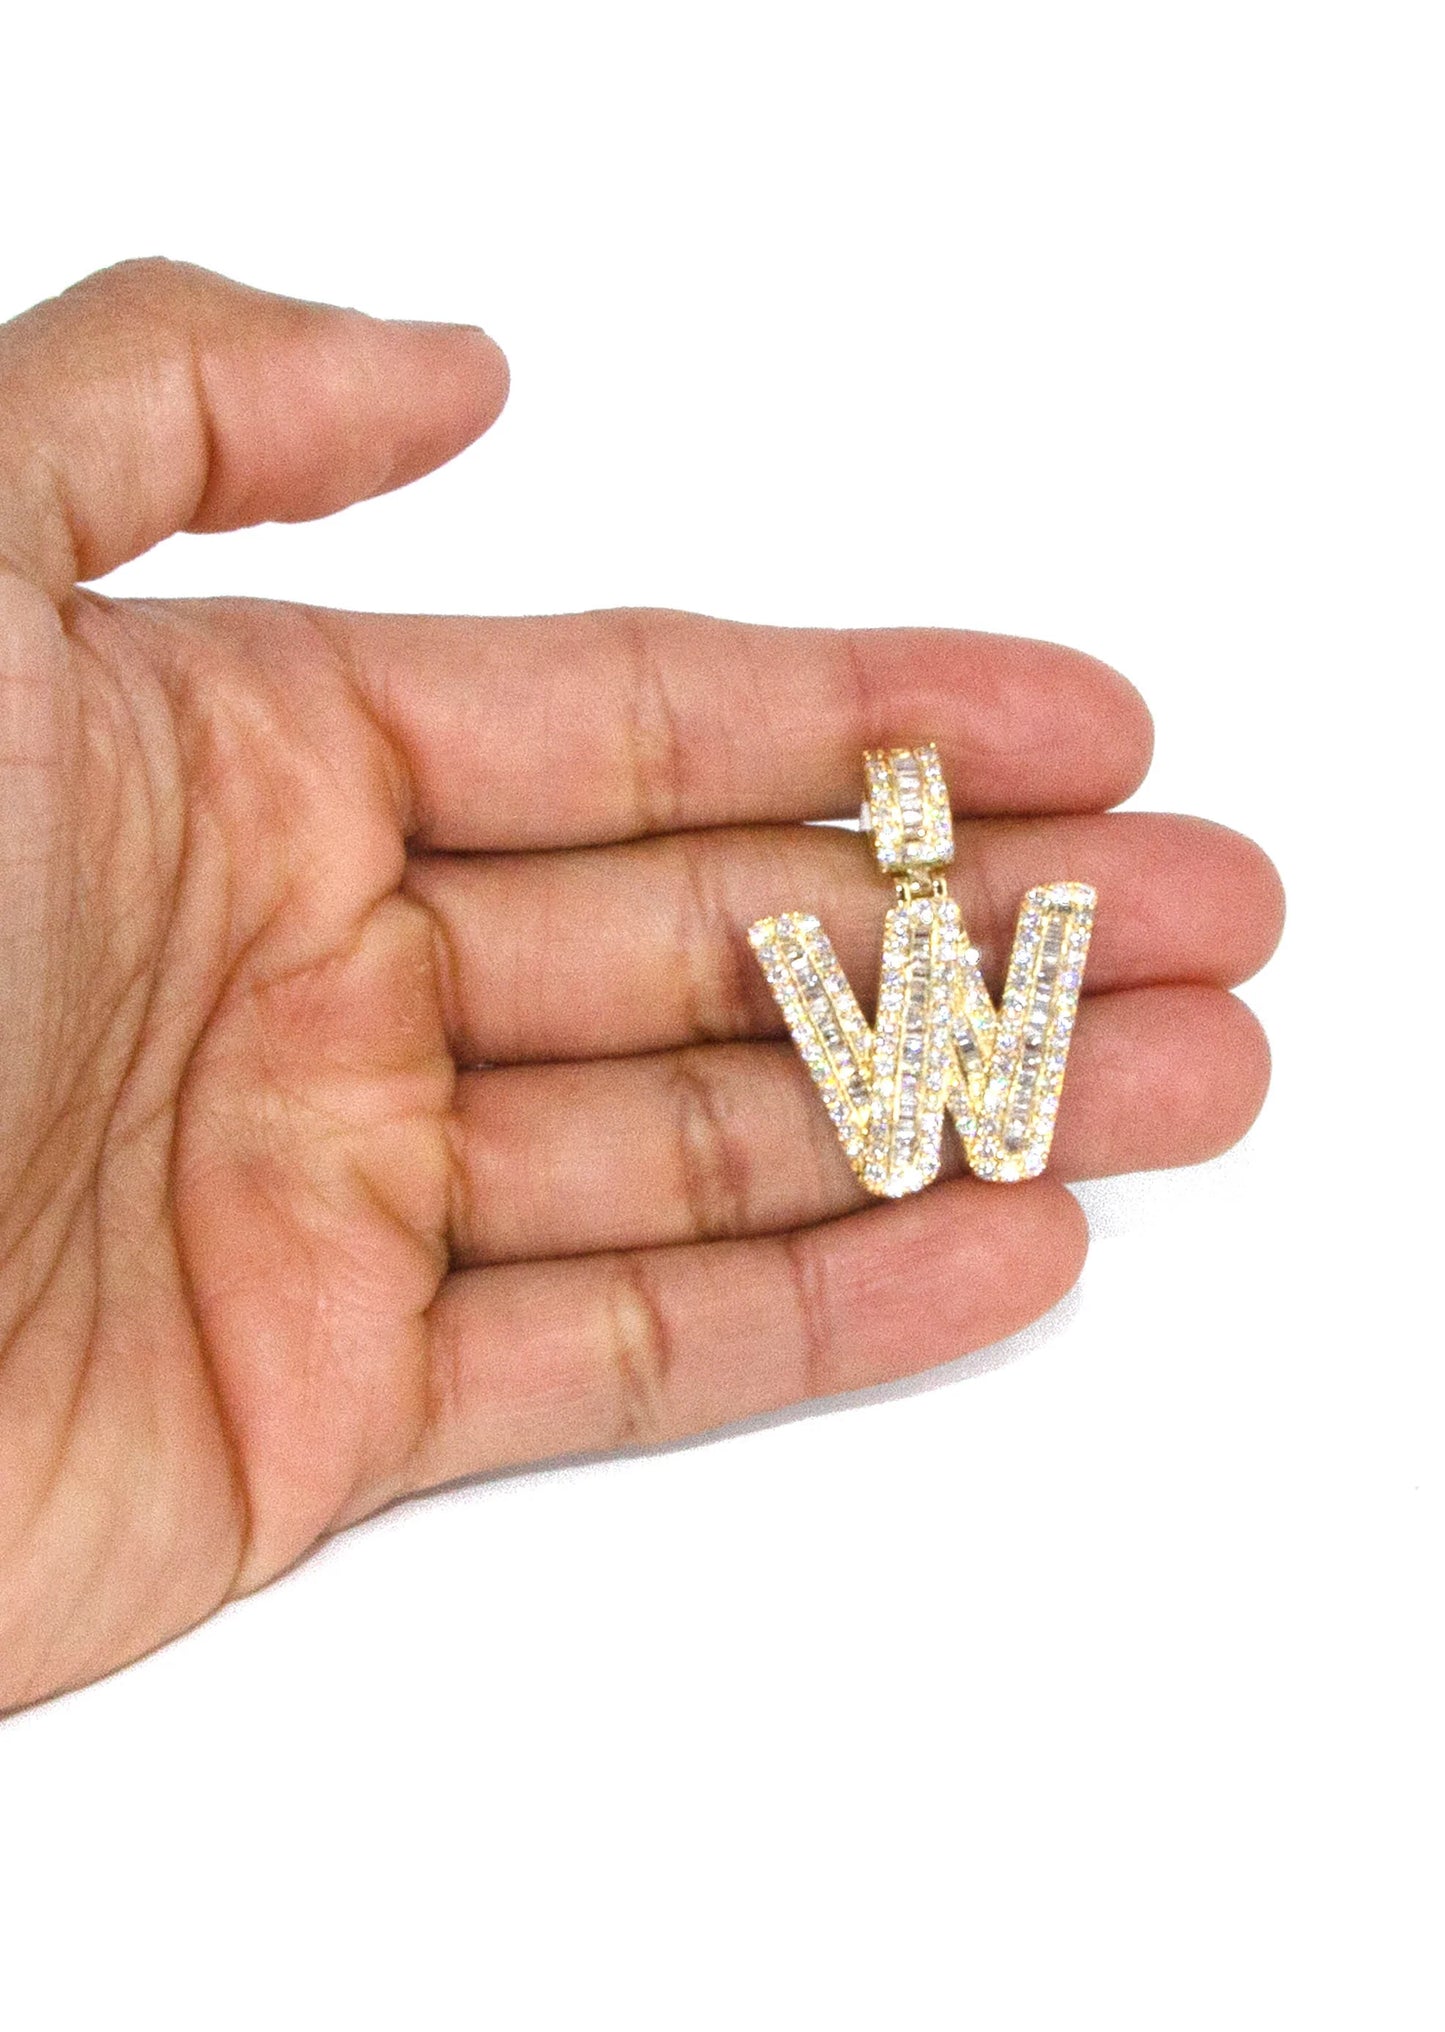 14K Yellow Gold Letter "W" Baguette Diamond